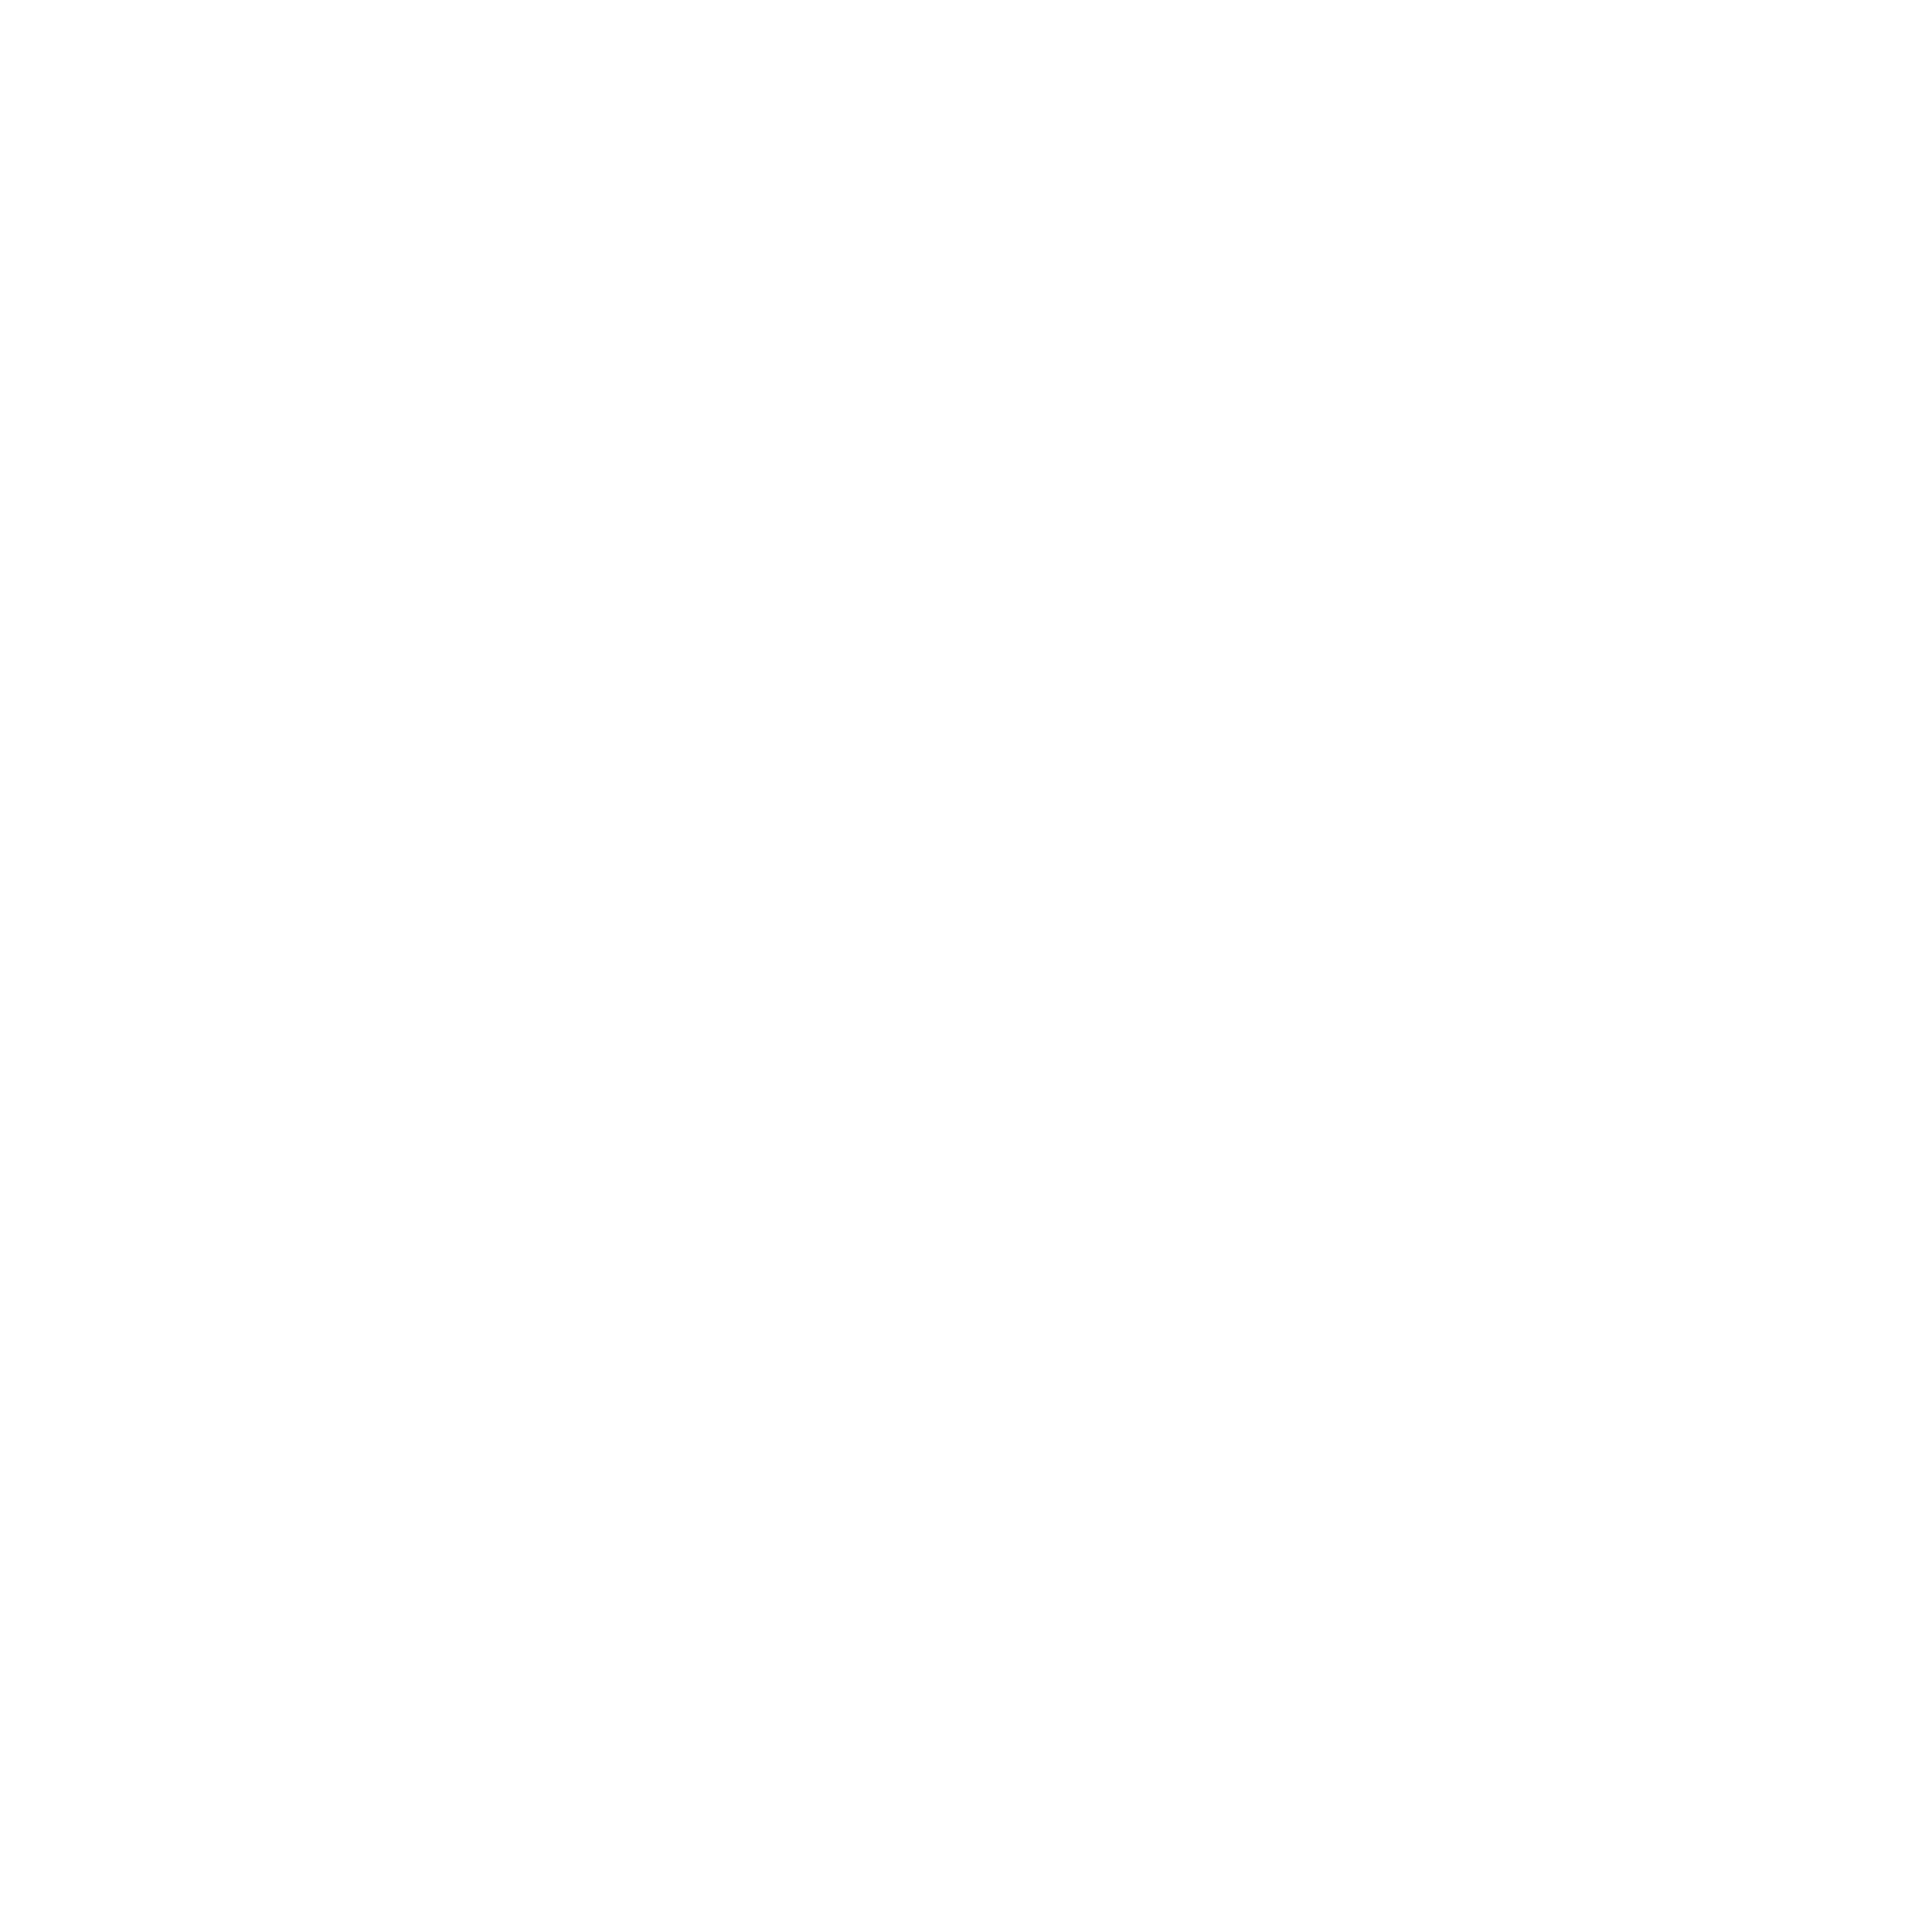 centrica-logo-black-and-white